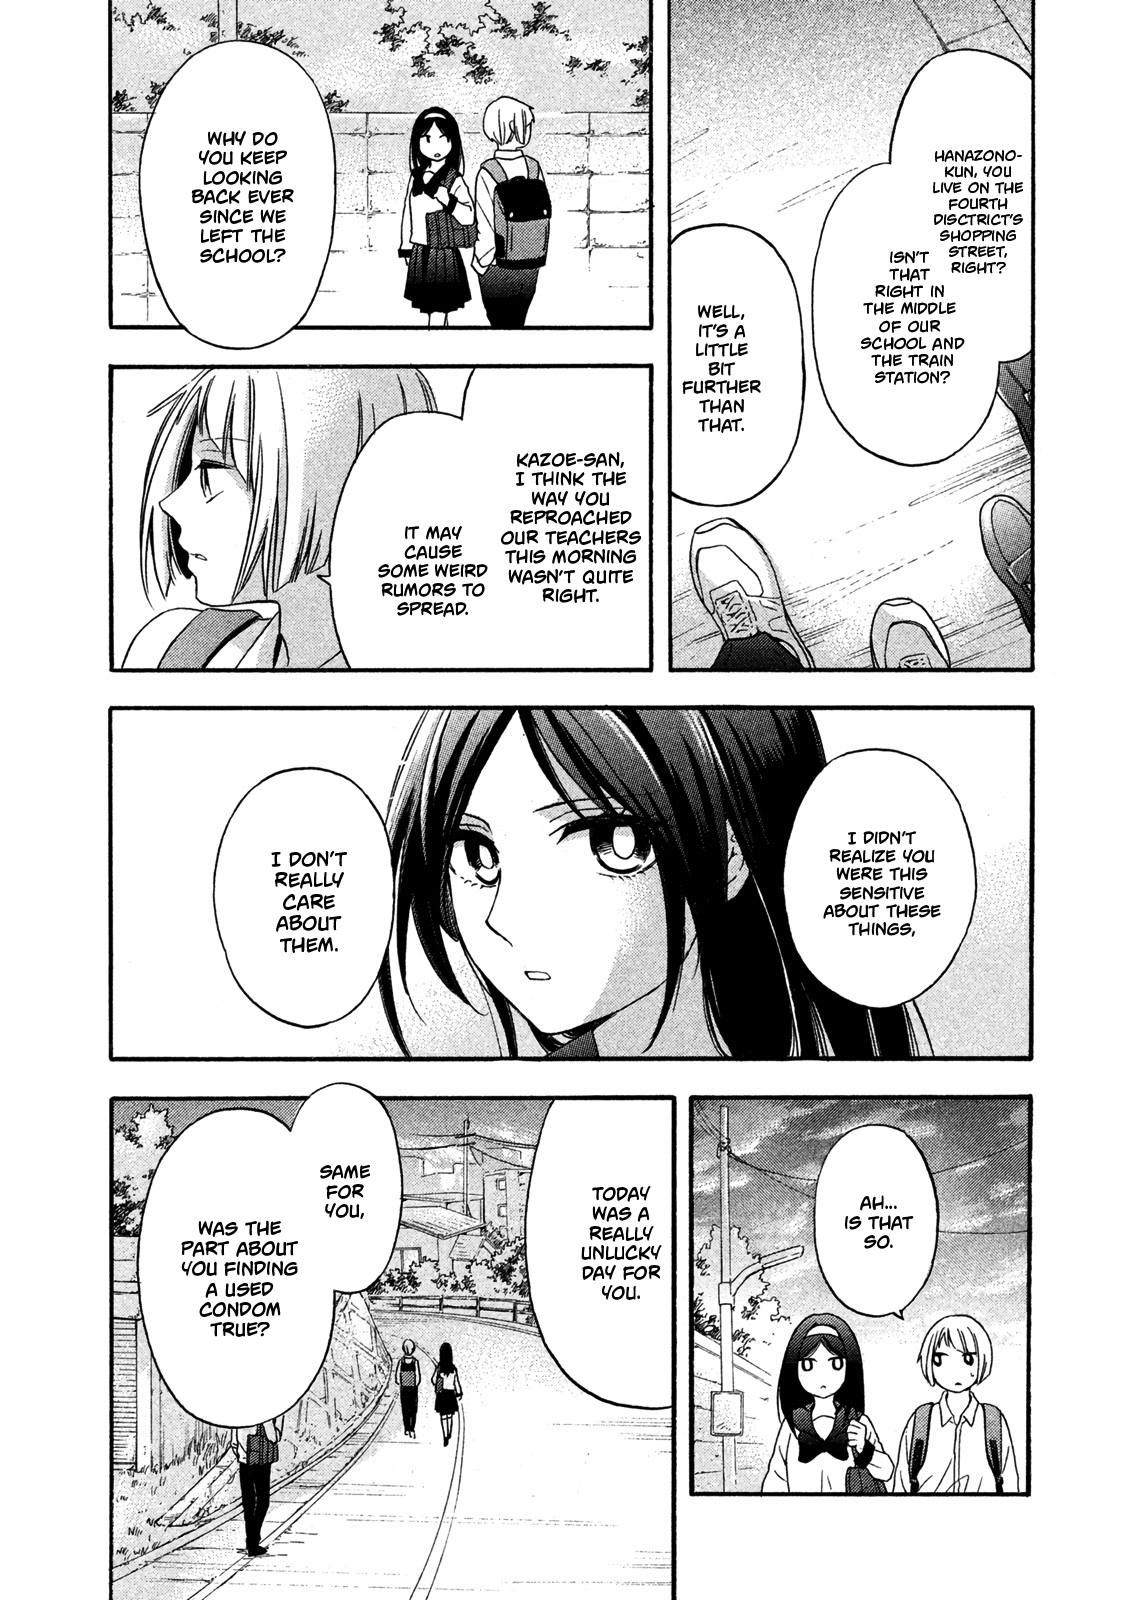 Hanazono and Kazoe's Bizarre After School Rendezvous Vol. 1 Ch. 8 Inexplicable Wordings